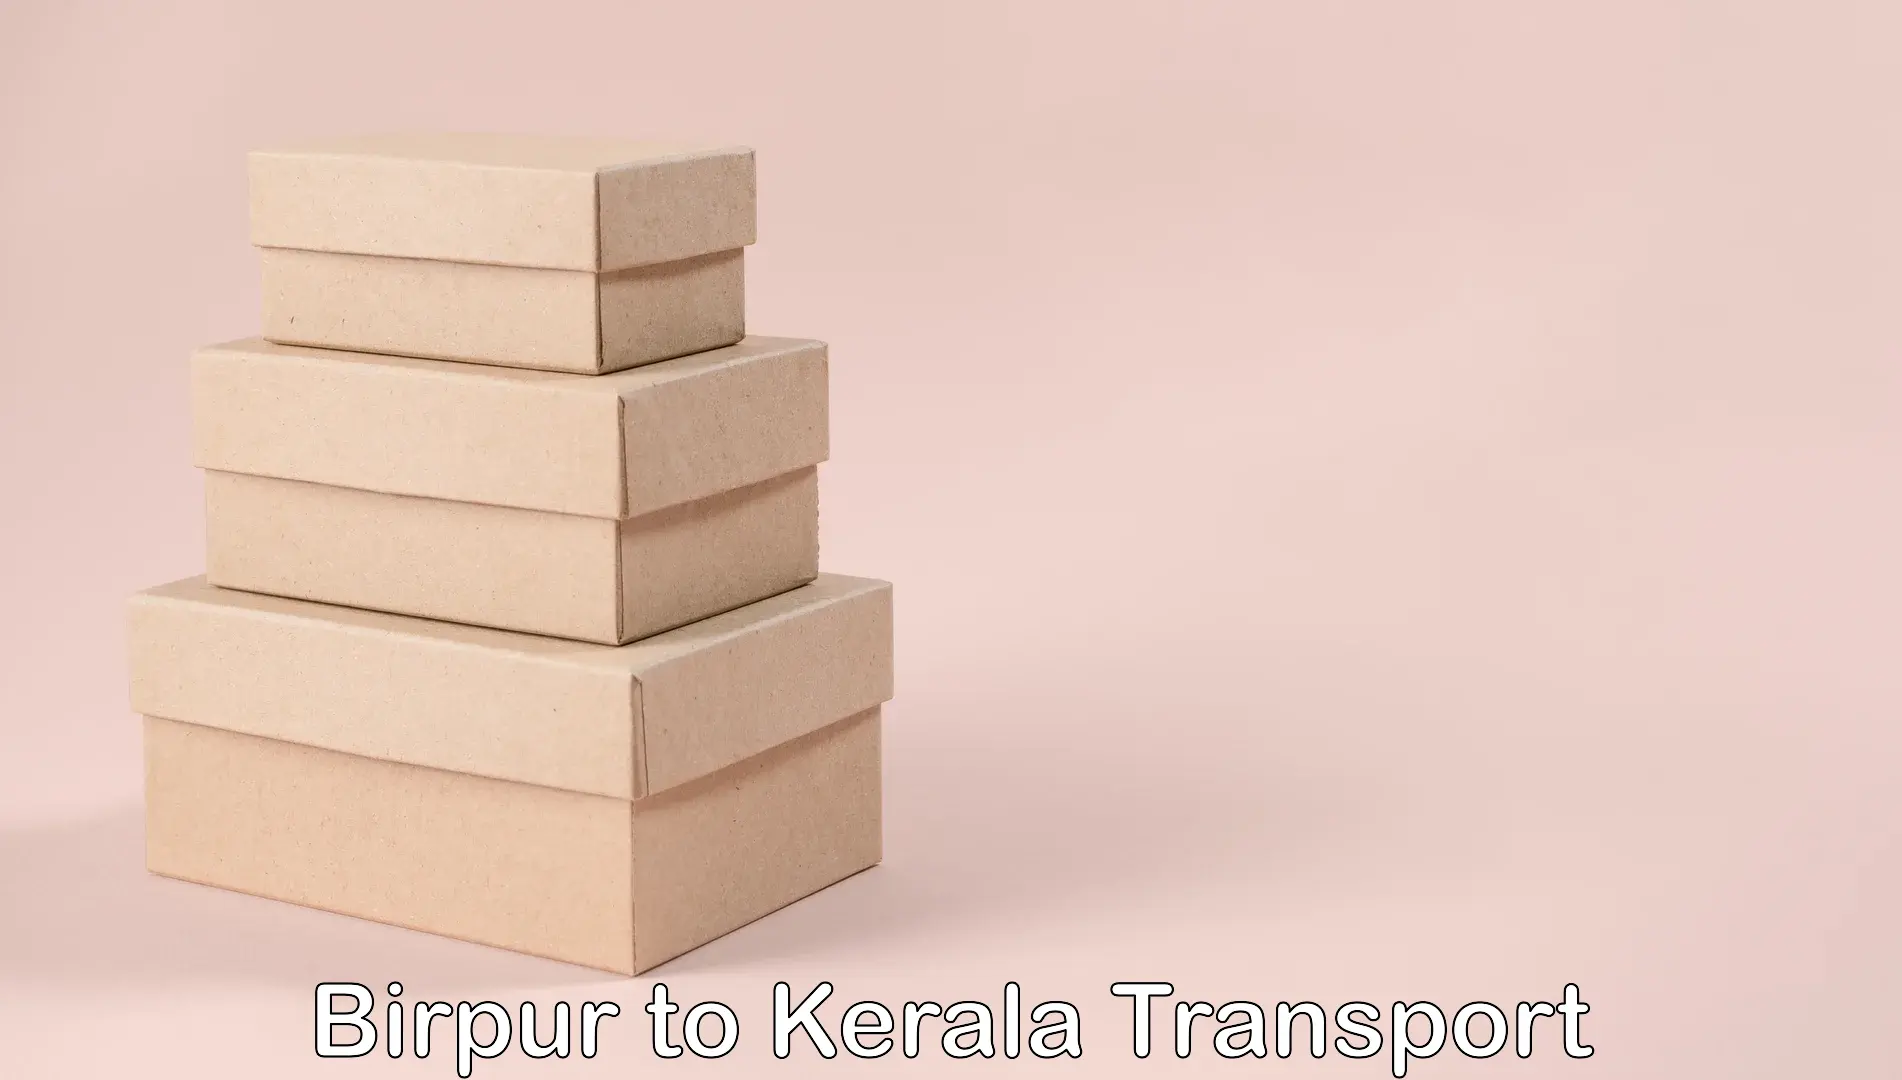 Shipping partner Birpur to Kerala